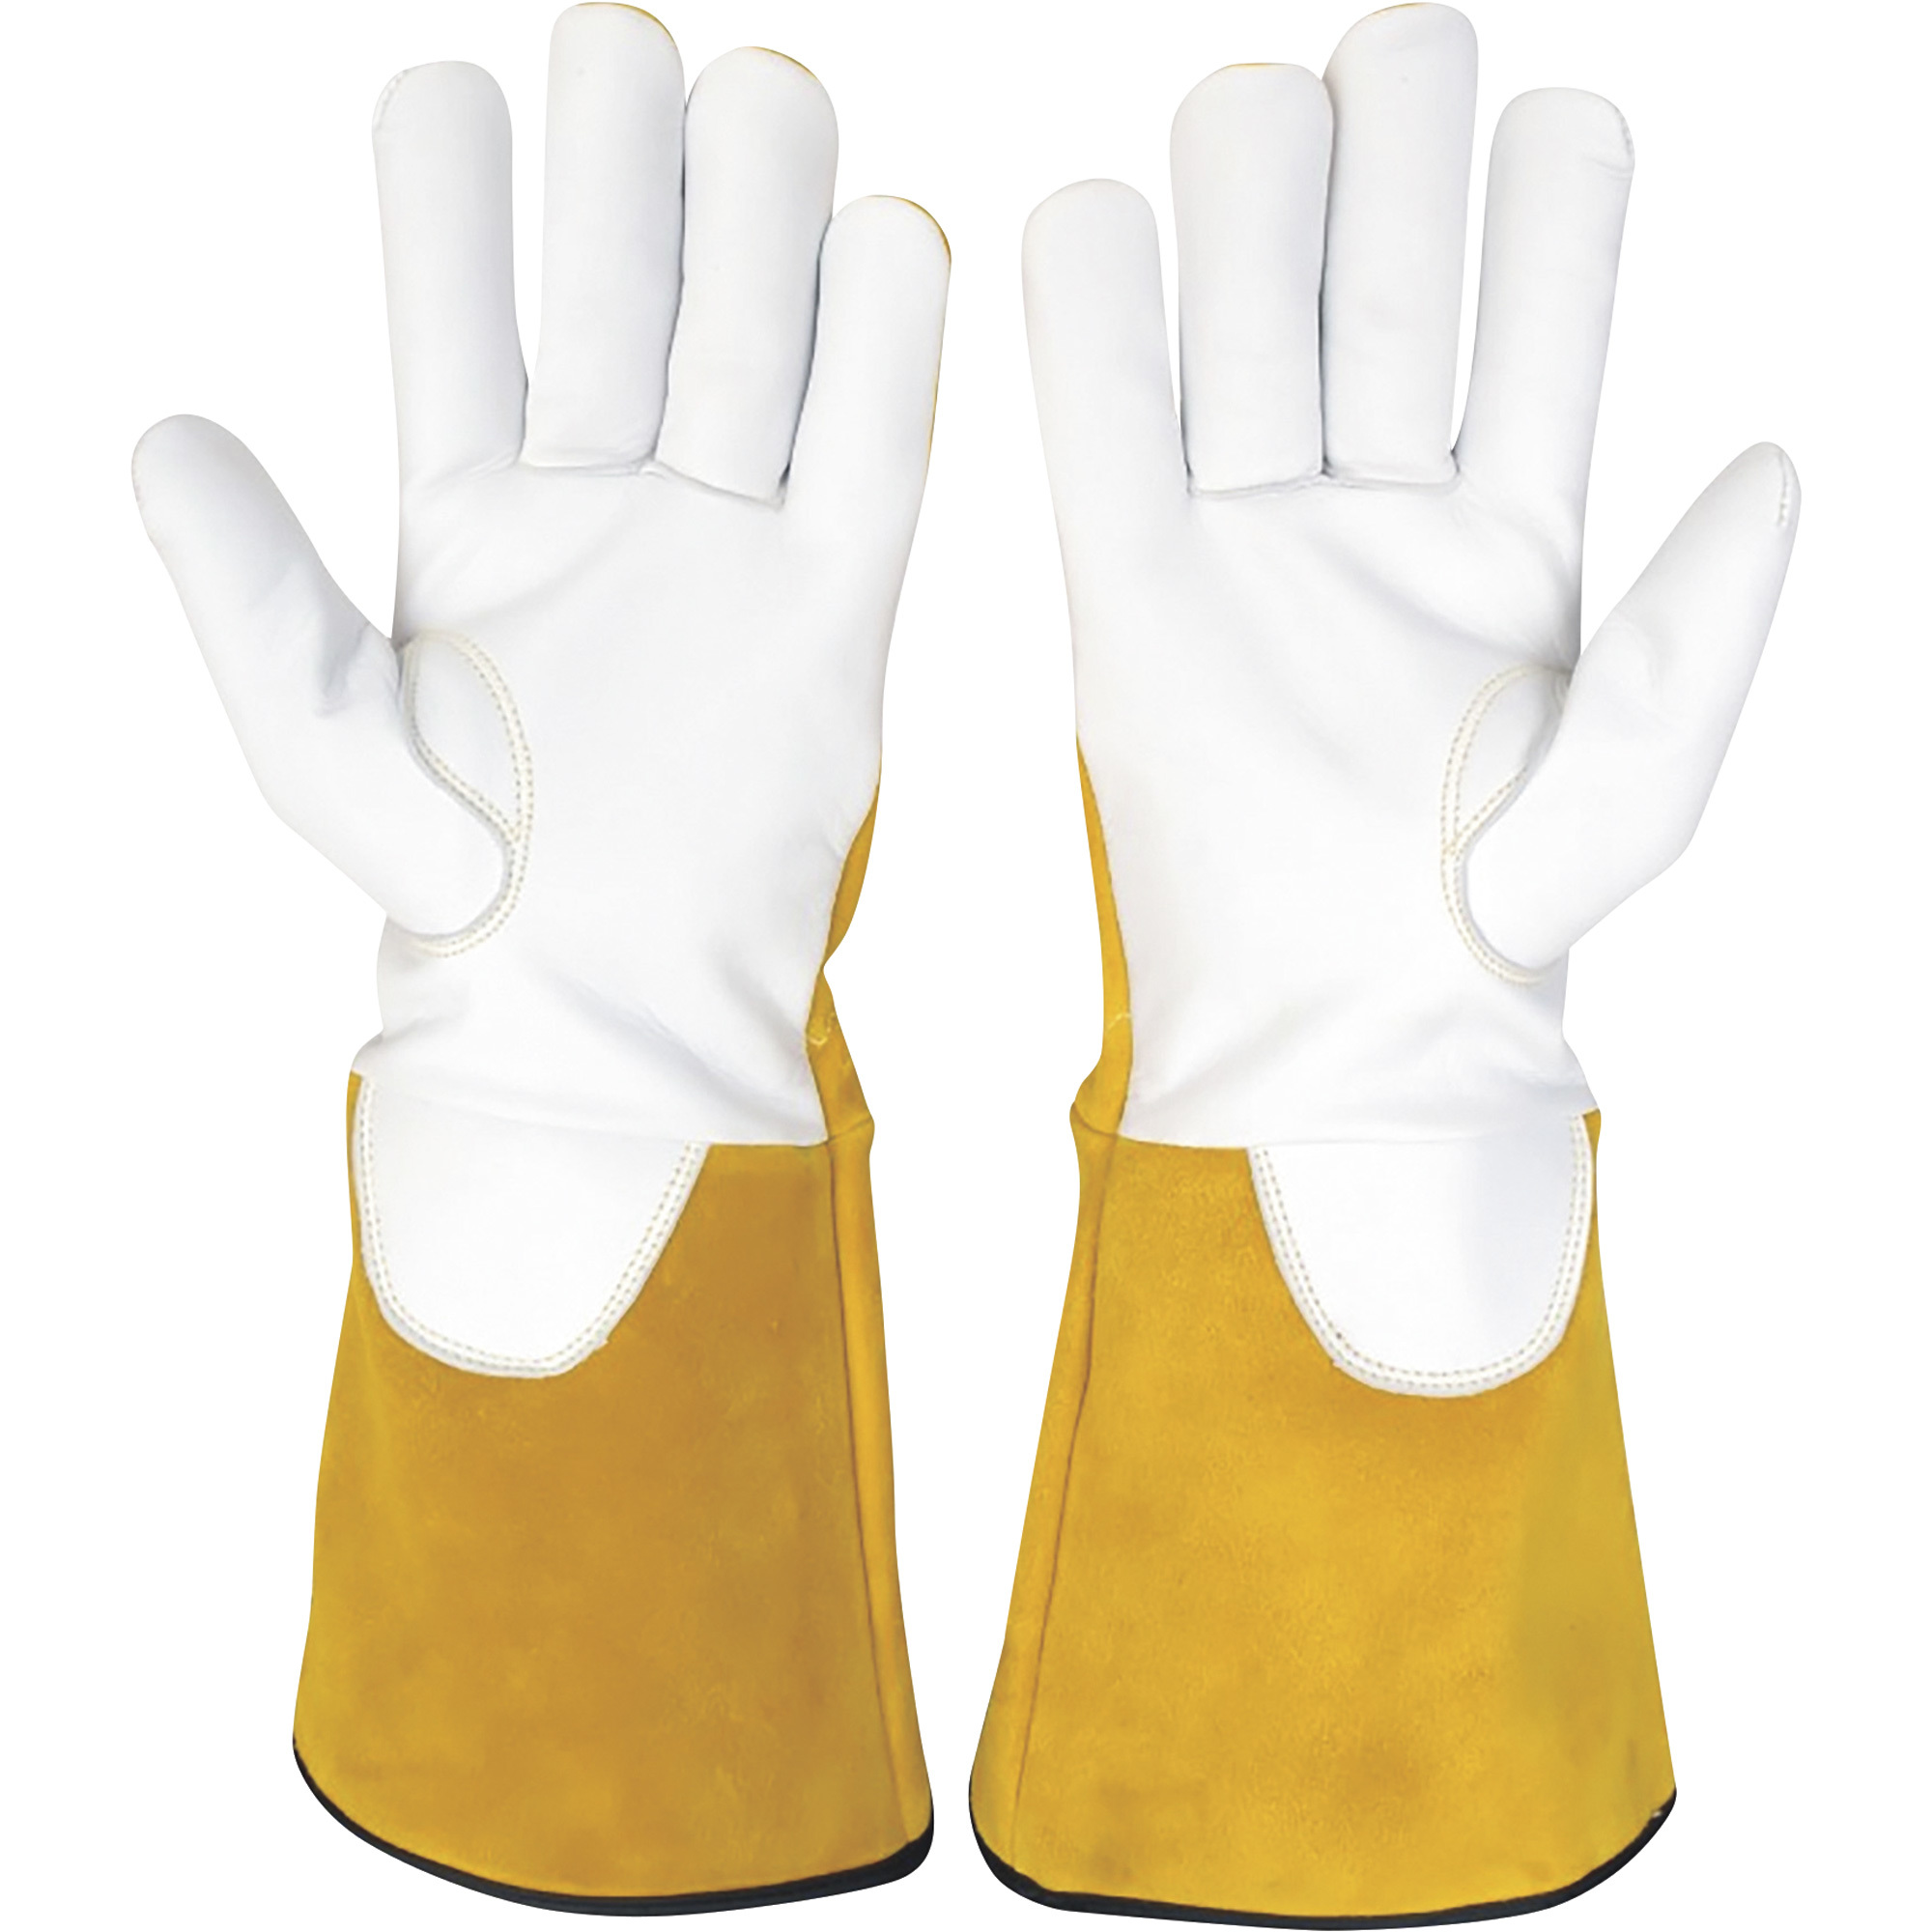 Klutch Cut-Resistant Goatskin/Cowhide TIG Welding Gloves â Single Pair, Gold/White, Large